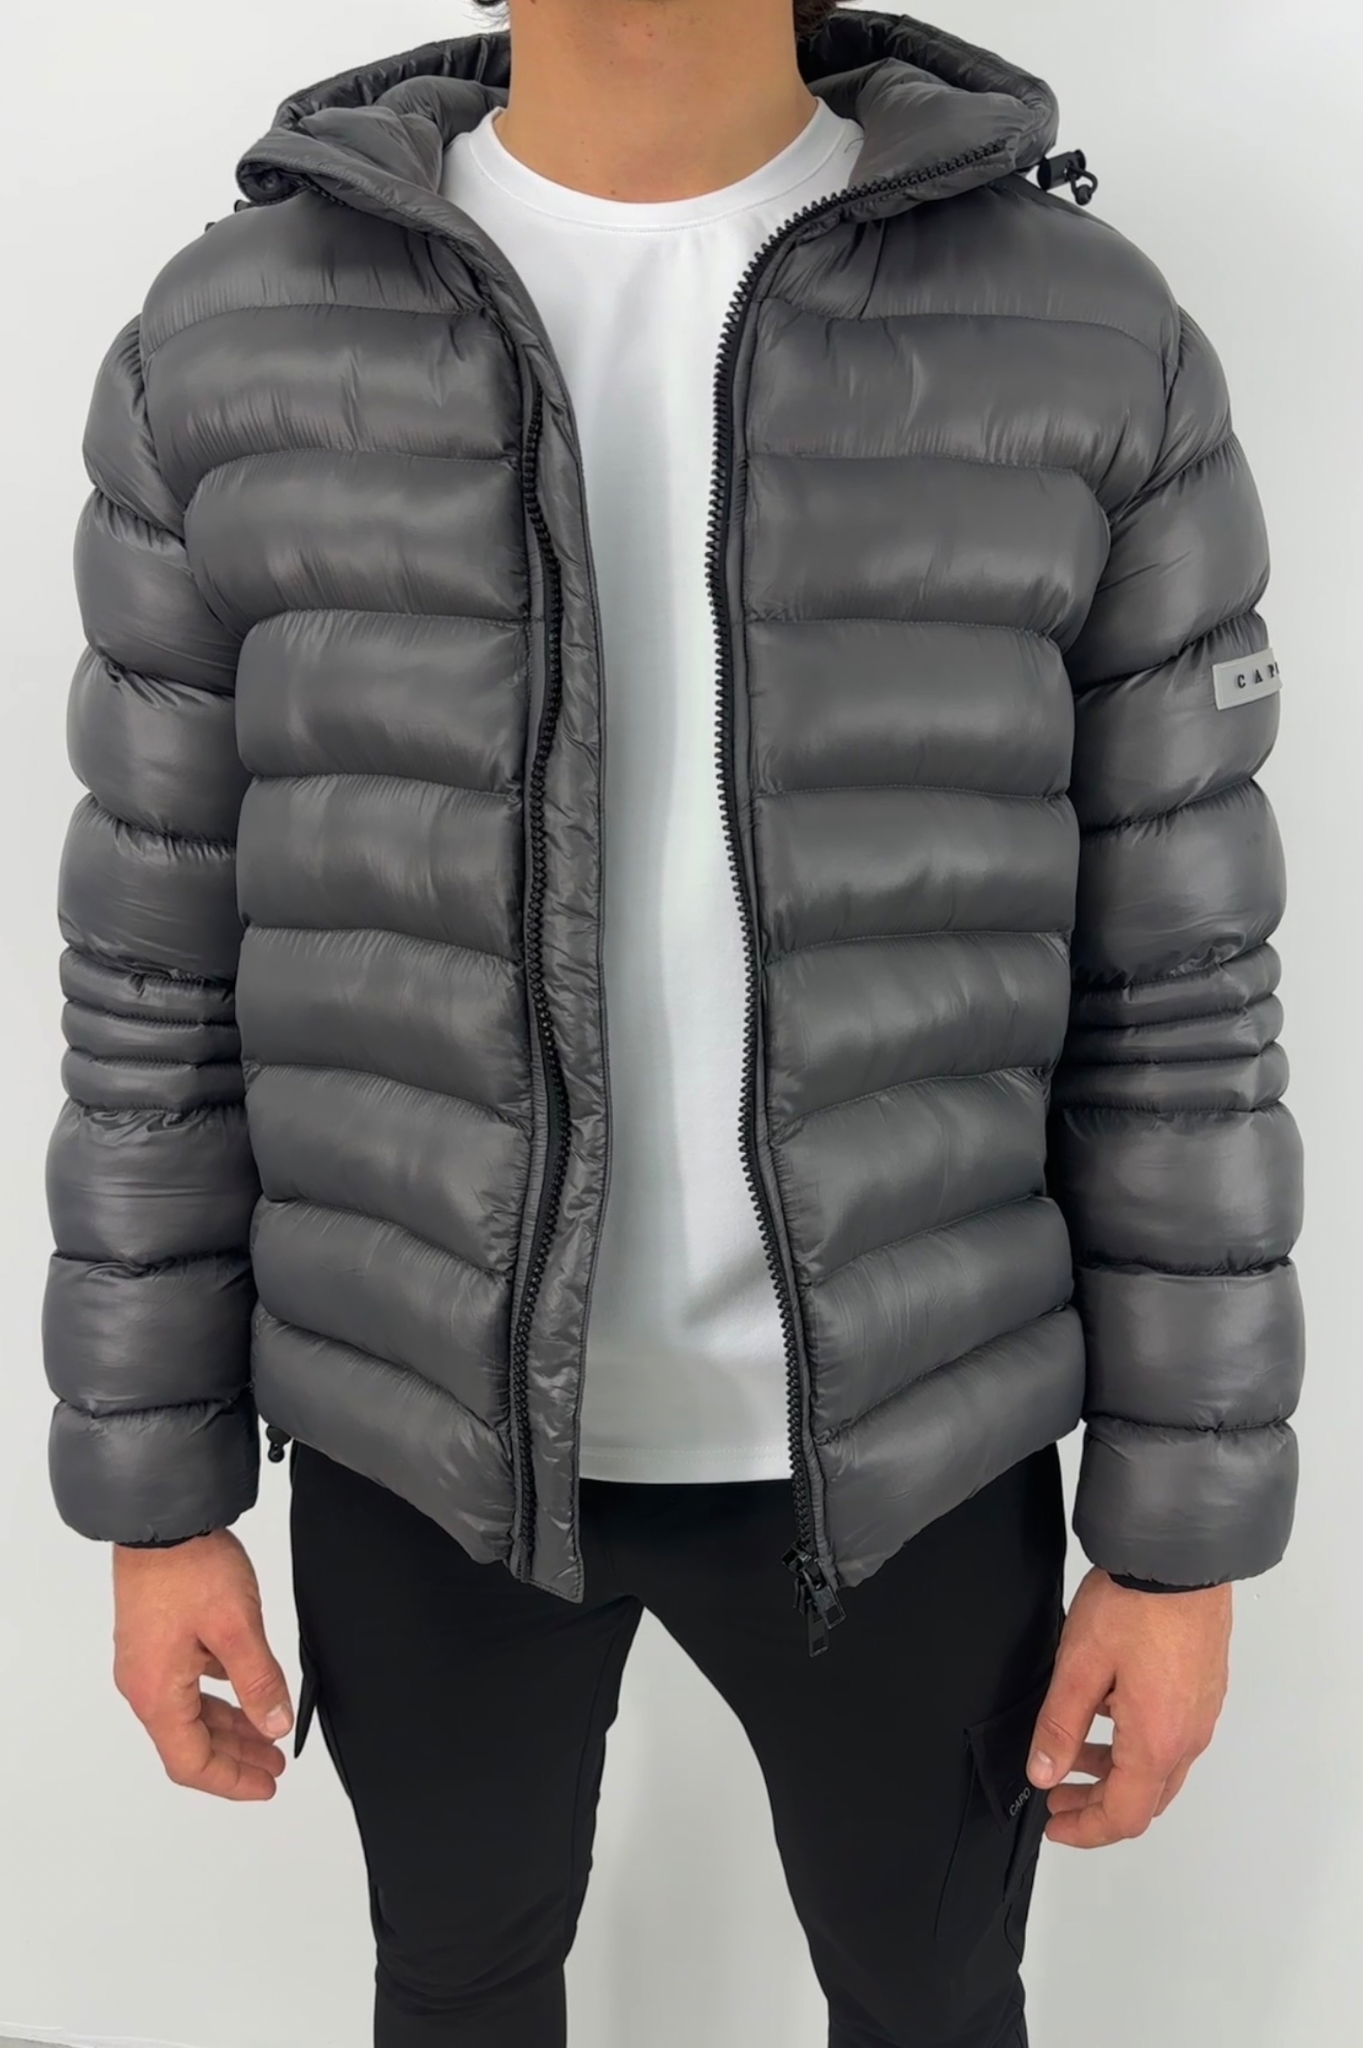 Capo PANEL Coat Jacket - Grey